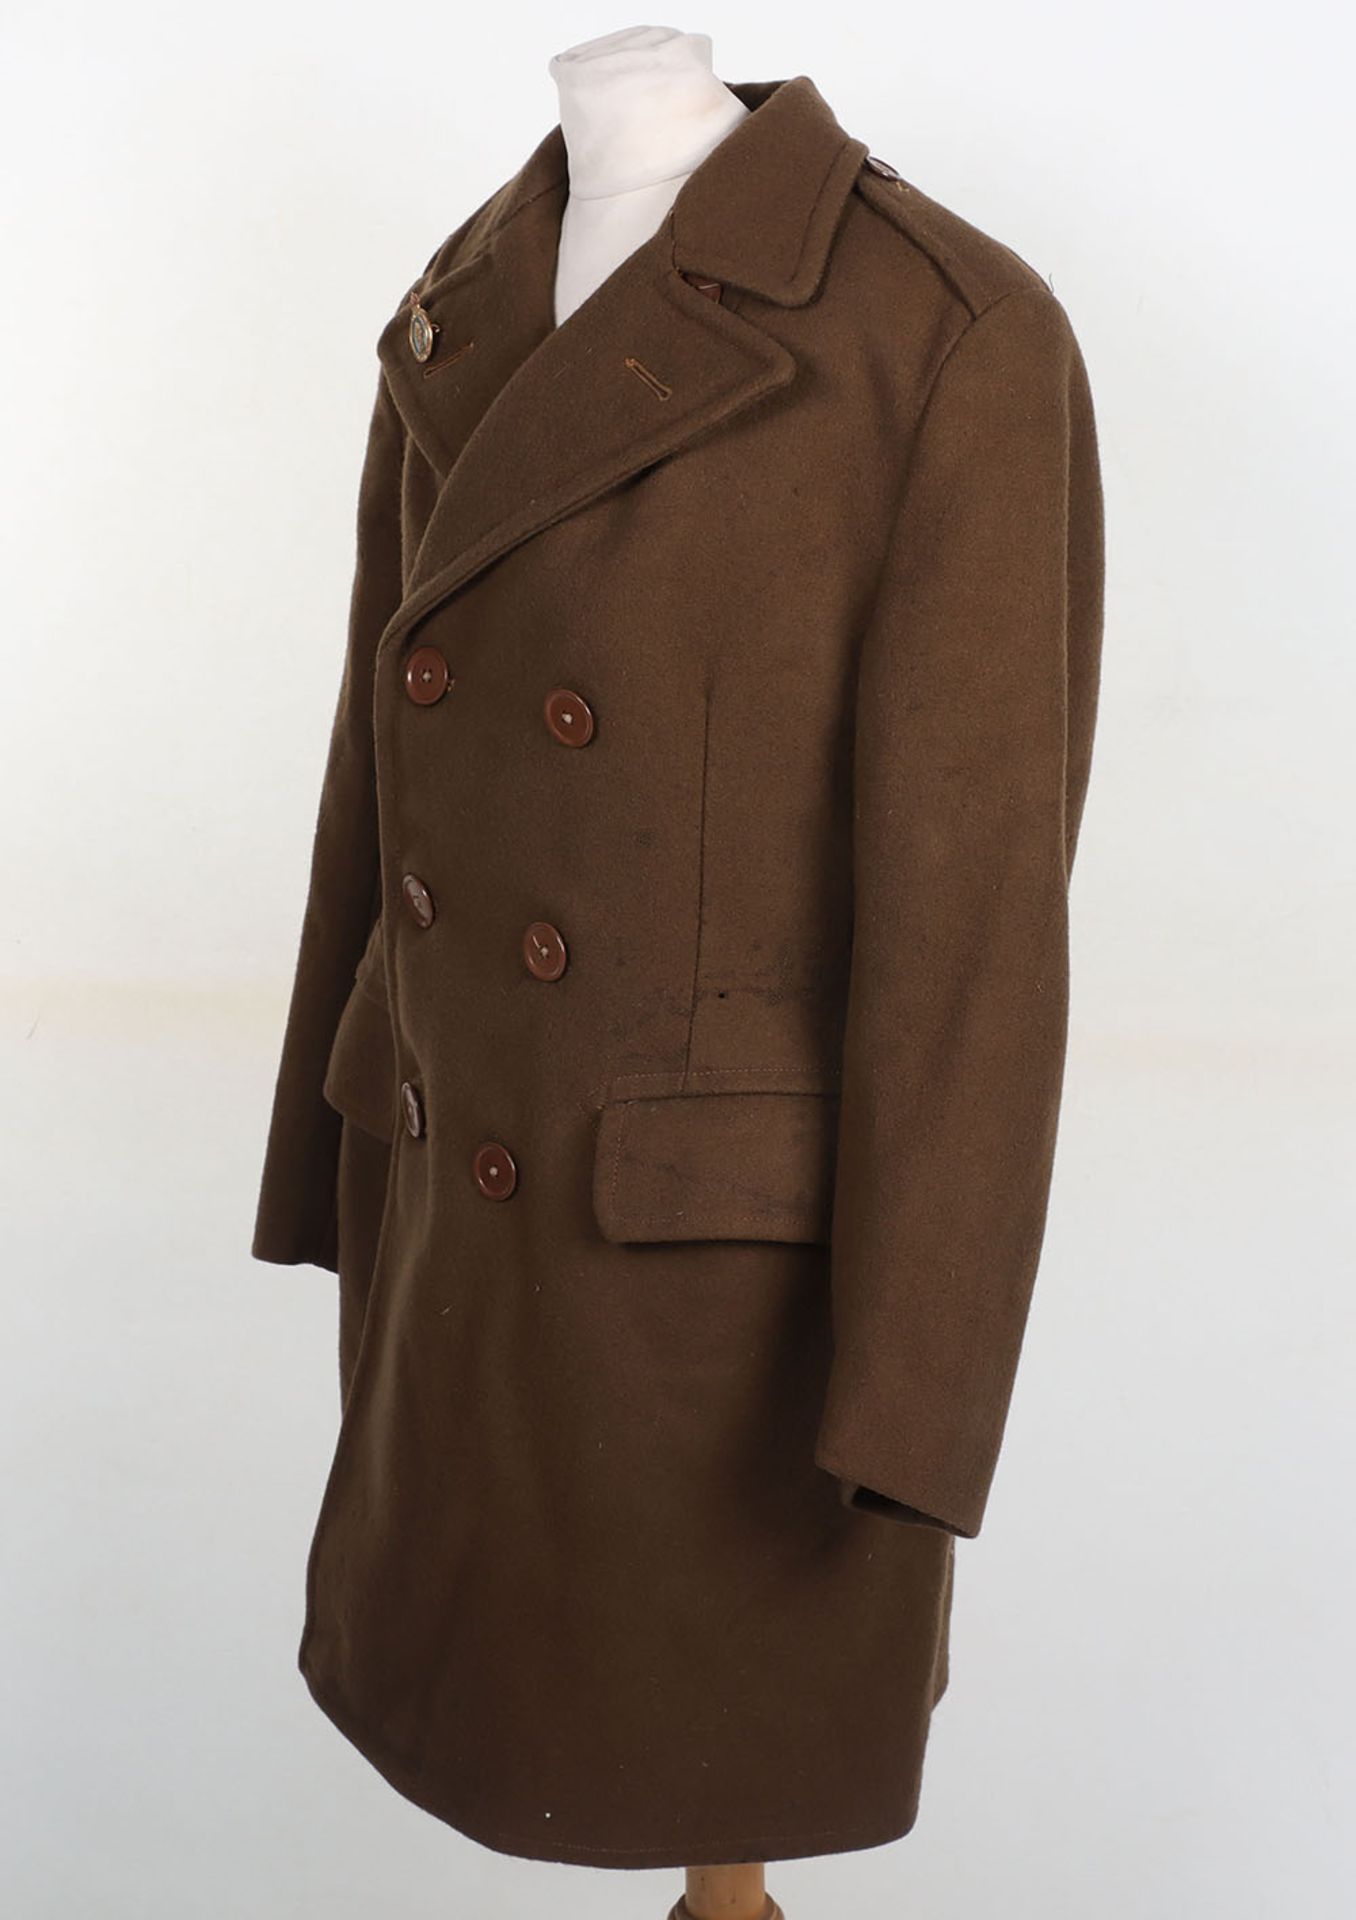 WW2 British Women’s Land Army Greatcoat - Image 6 of 12